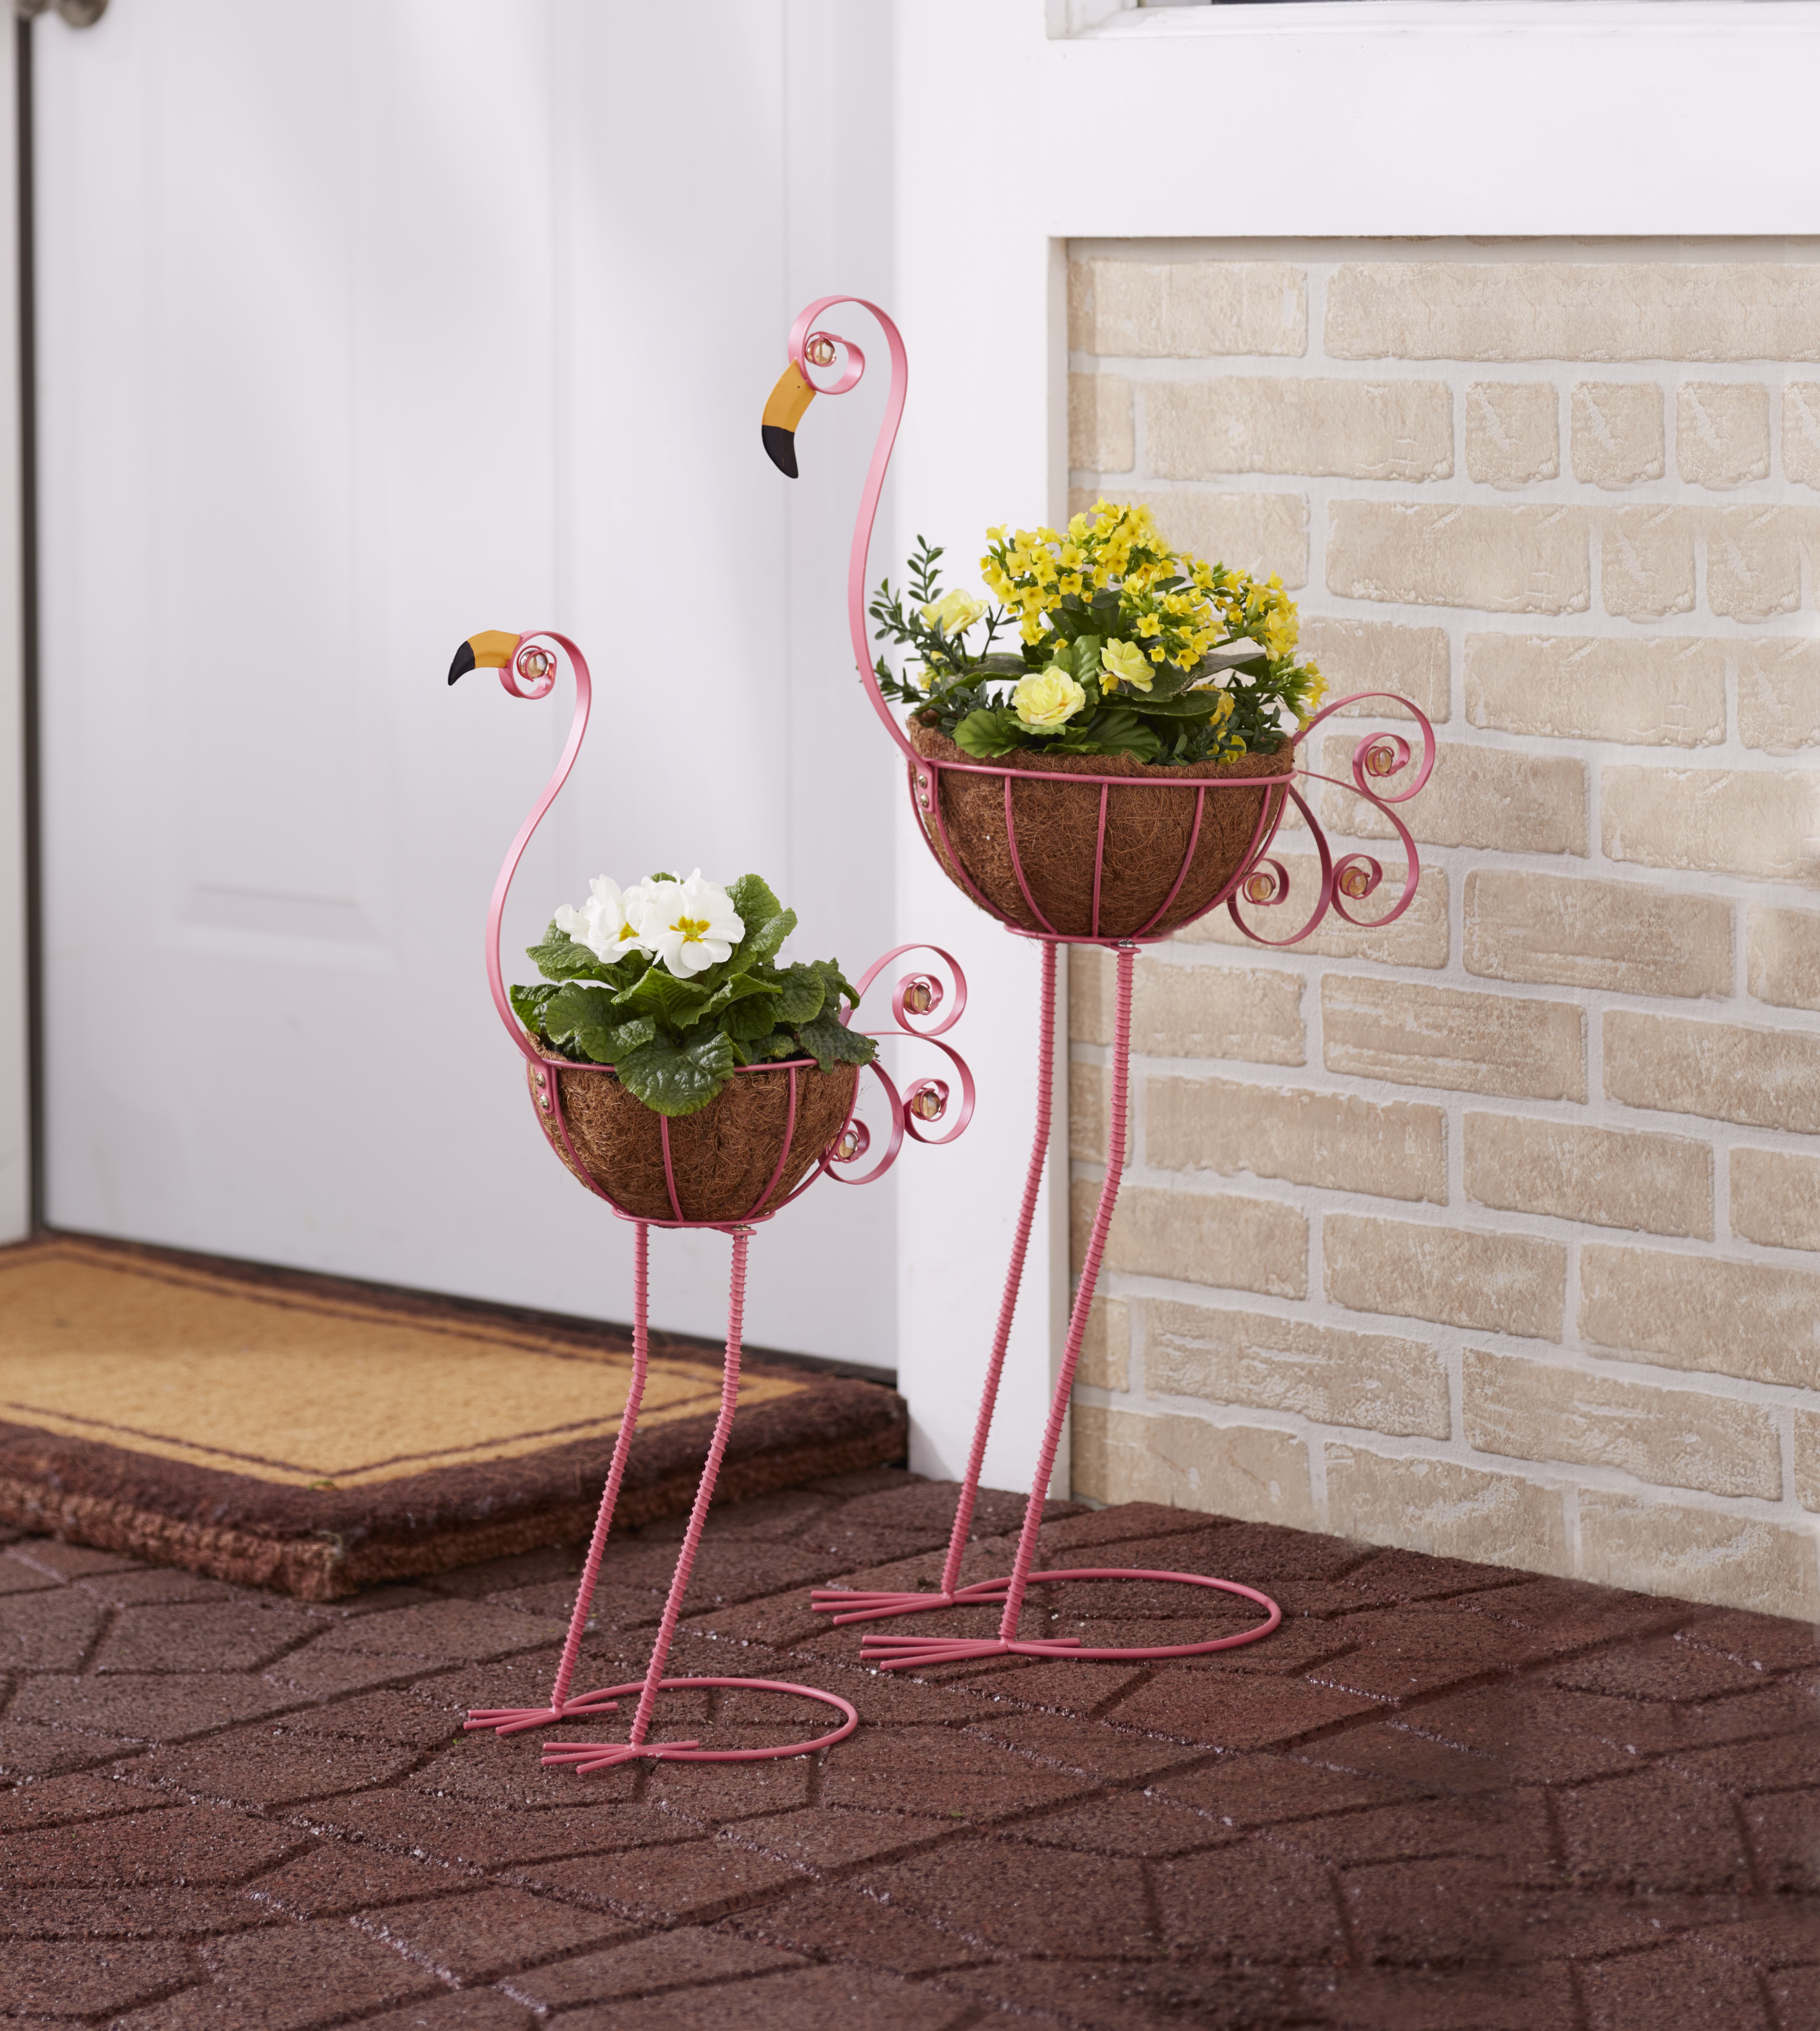 Flamingo Bird Planters with Coconut Fiber Basket - Pink - Set of 2 - image 1 of 2